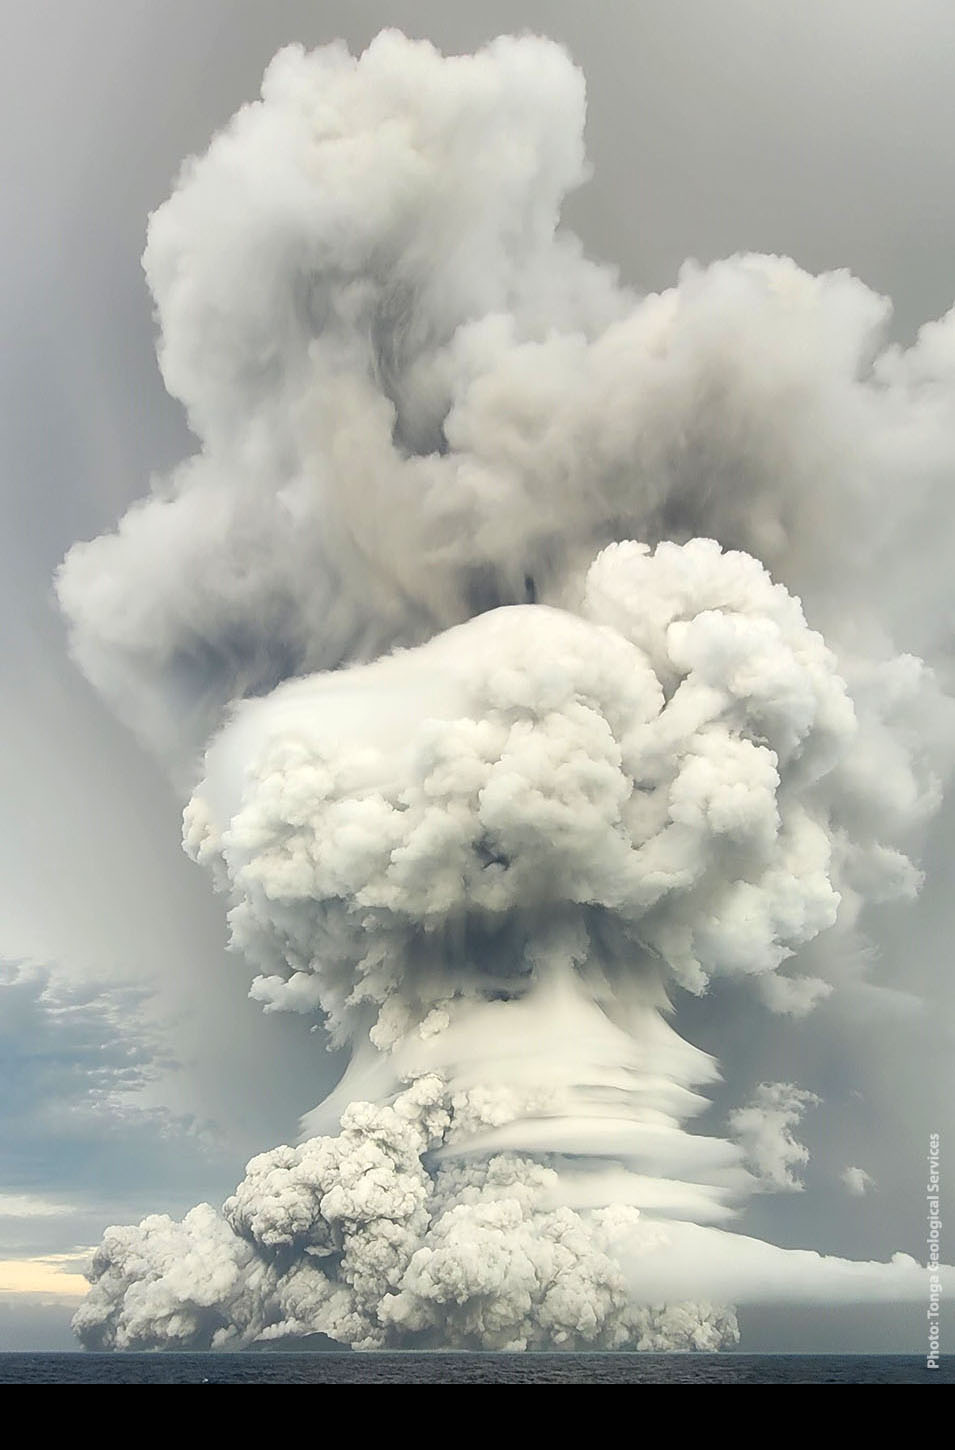 Hunga eruption